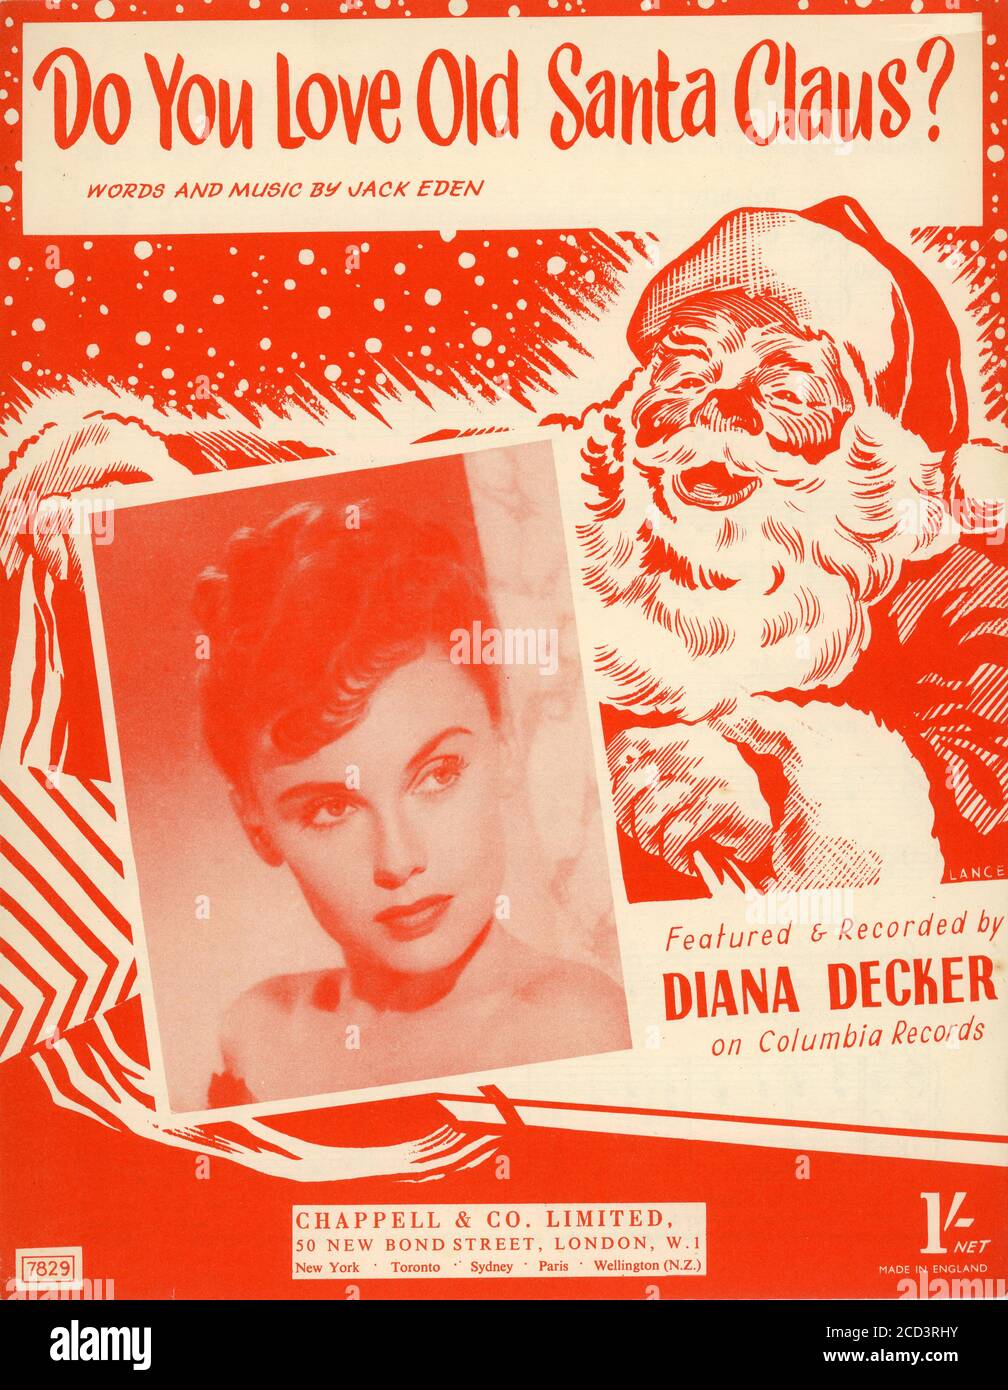 Sheet Music - Do you love Old Santa Claus? - Diana Decker - 1954 Stock Photo